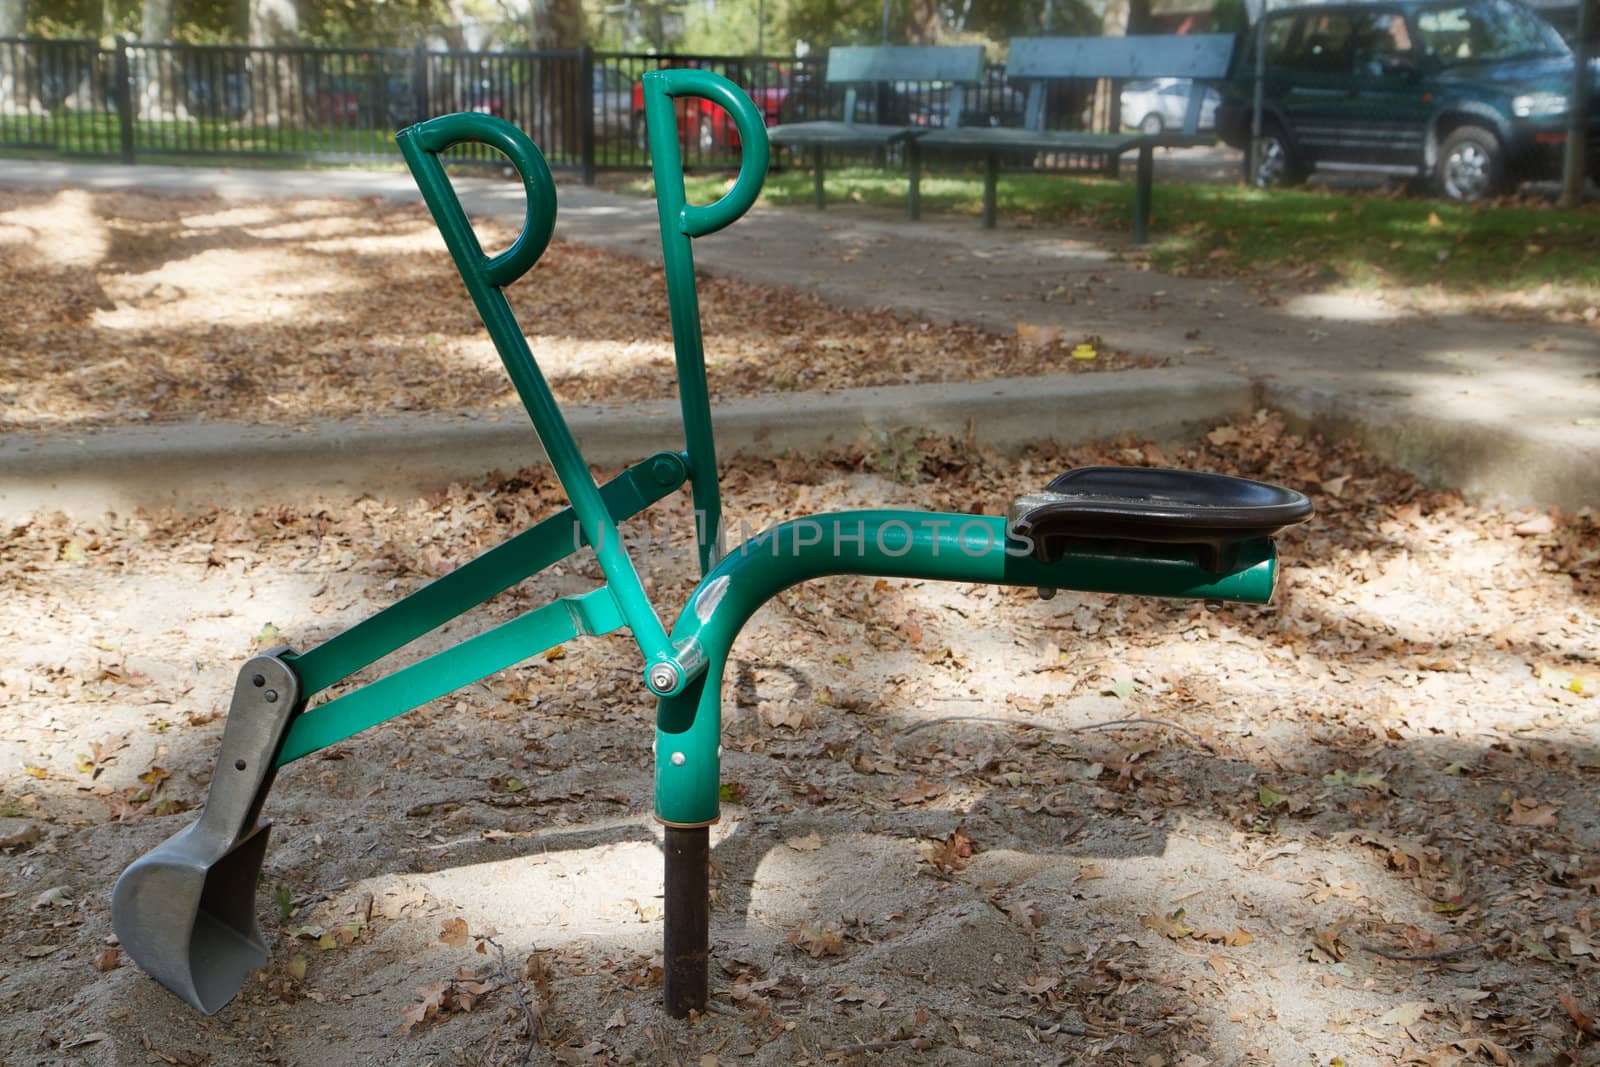 Childrens playground shovel by bobkeenan